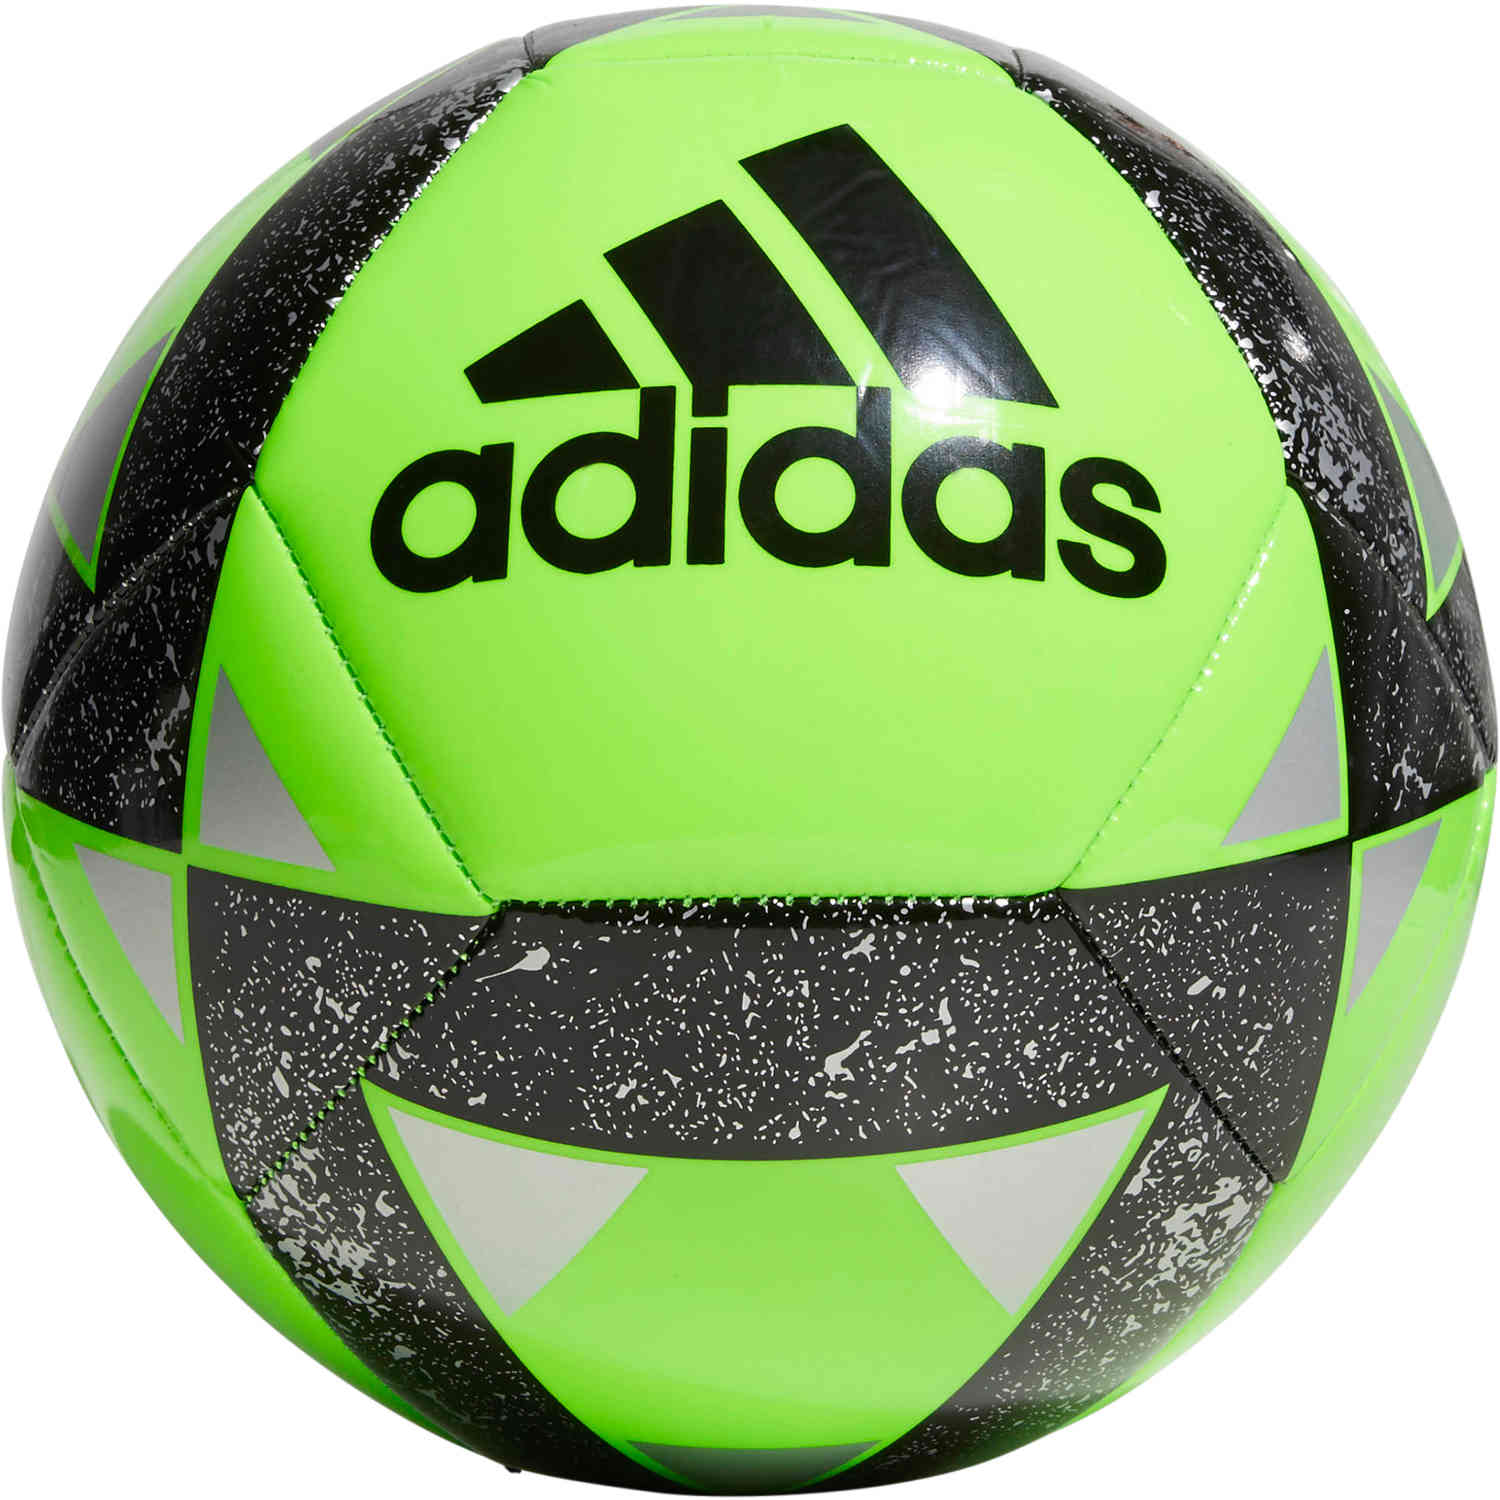 adidas soccer ball green